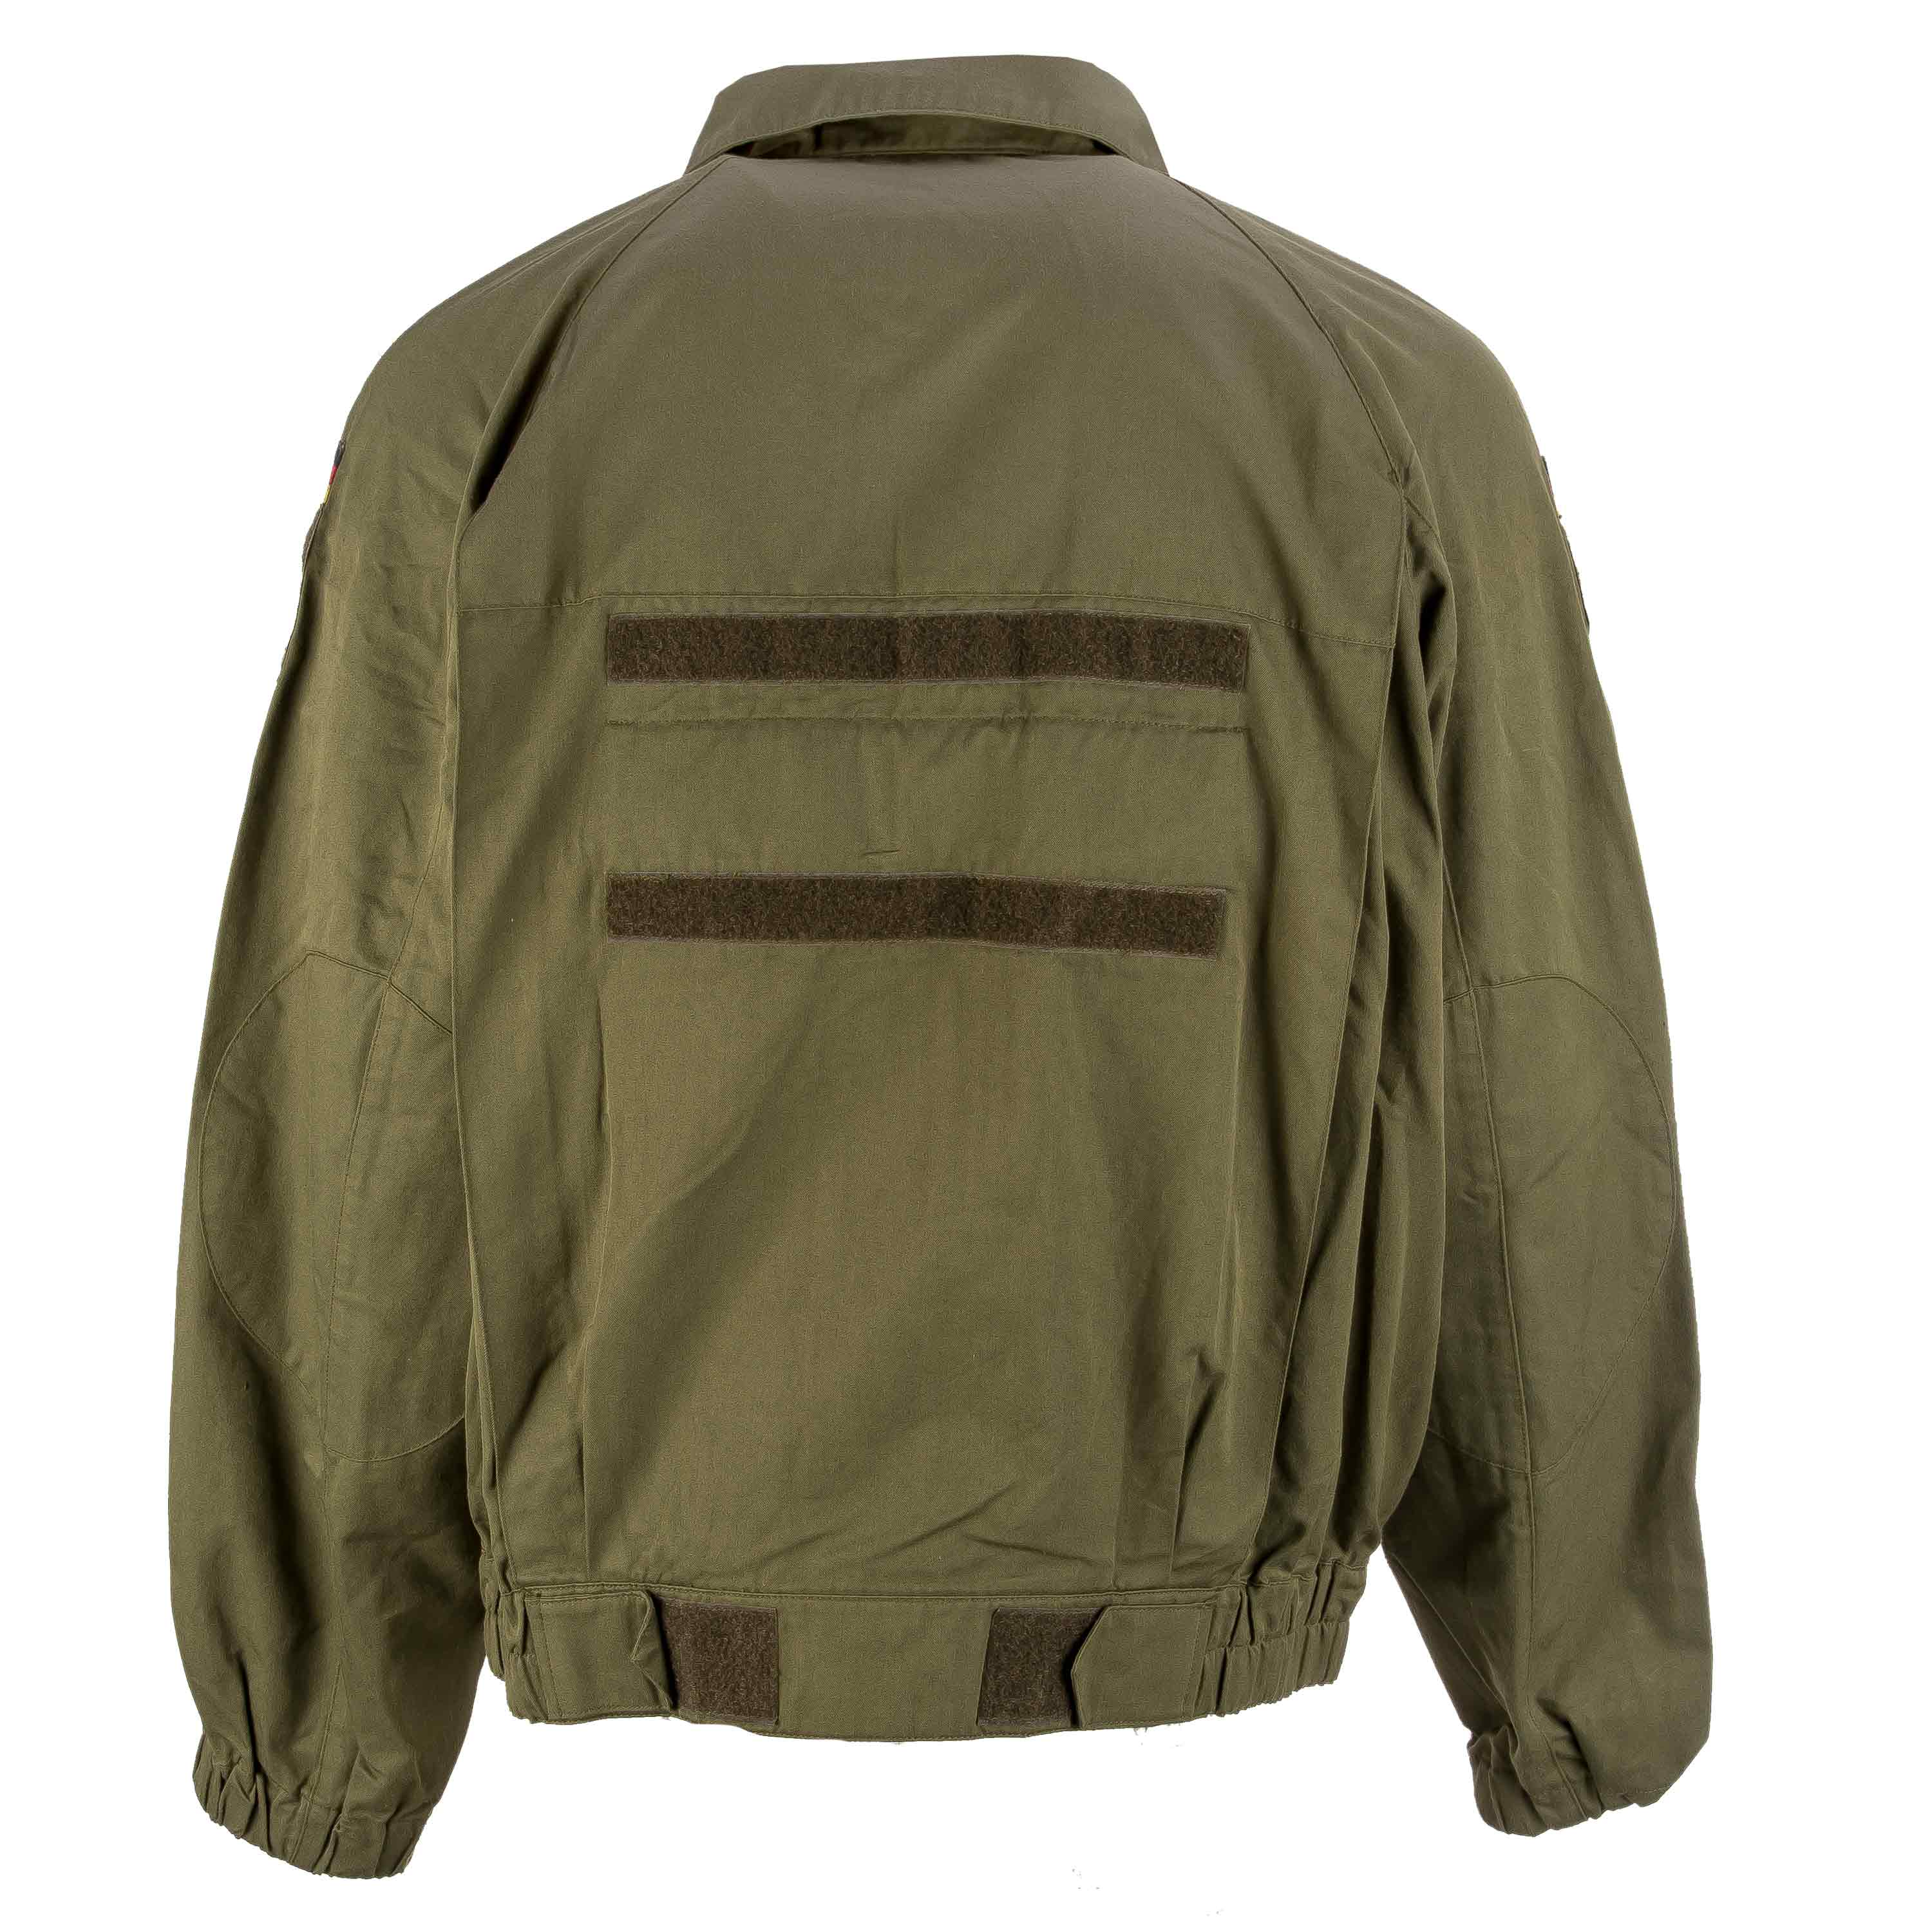 Purchase the Duty Uniform Feldjäger Used olive by ASMC